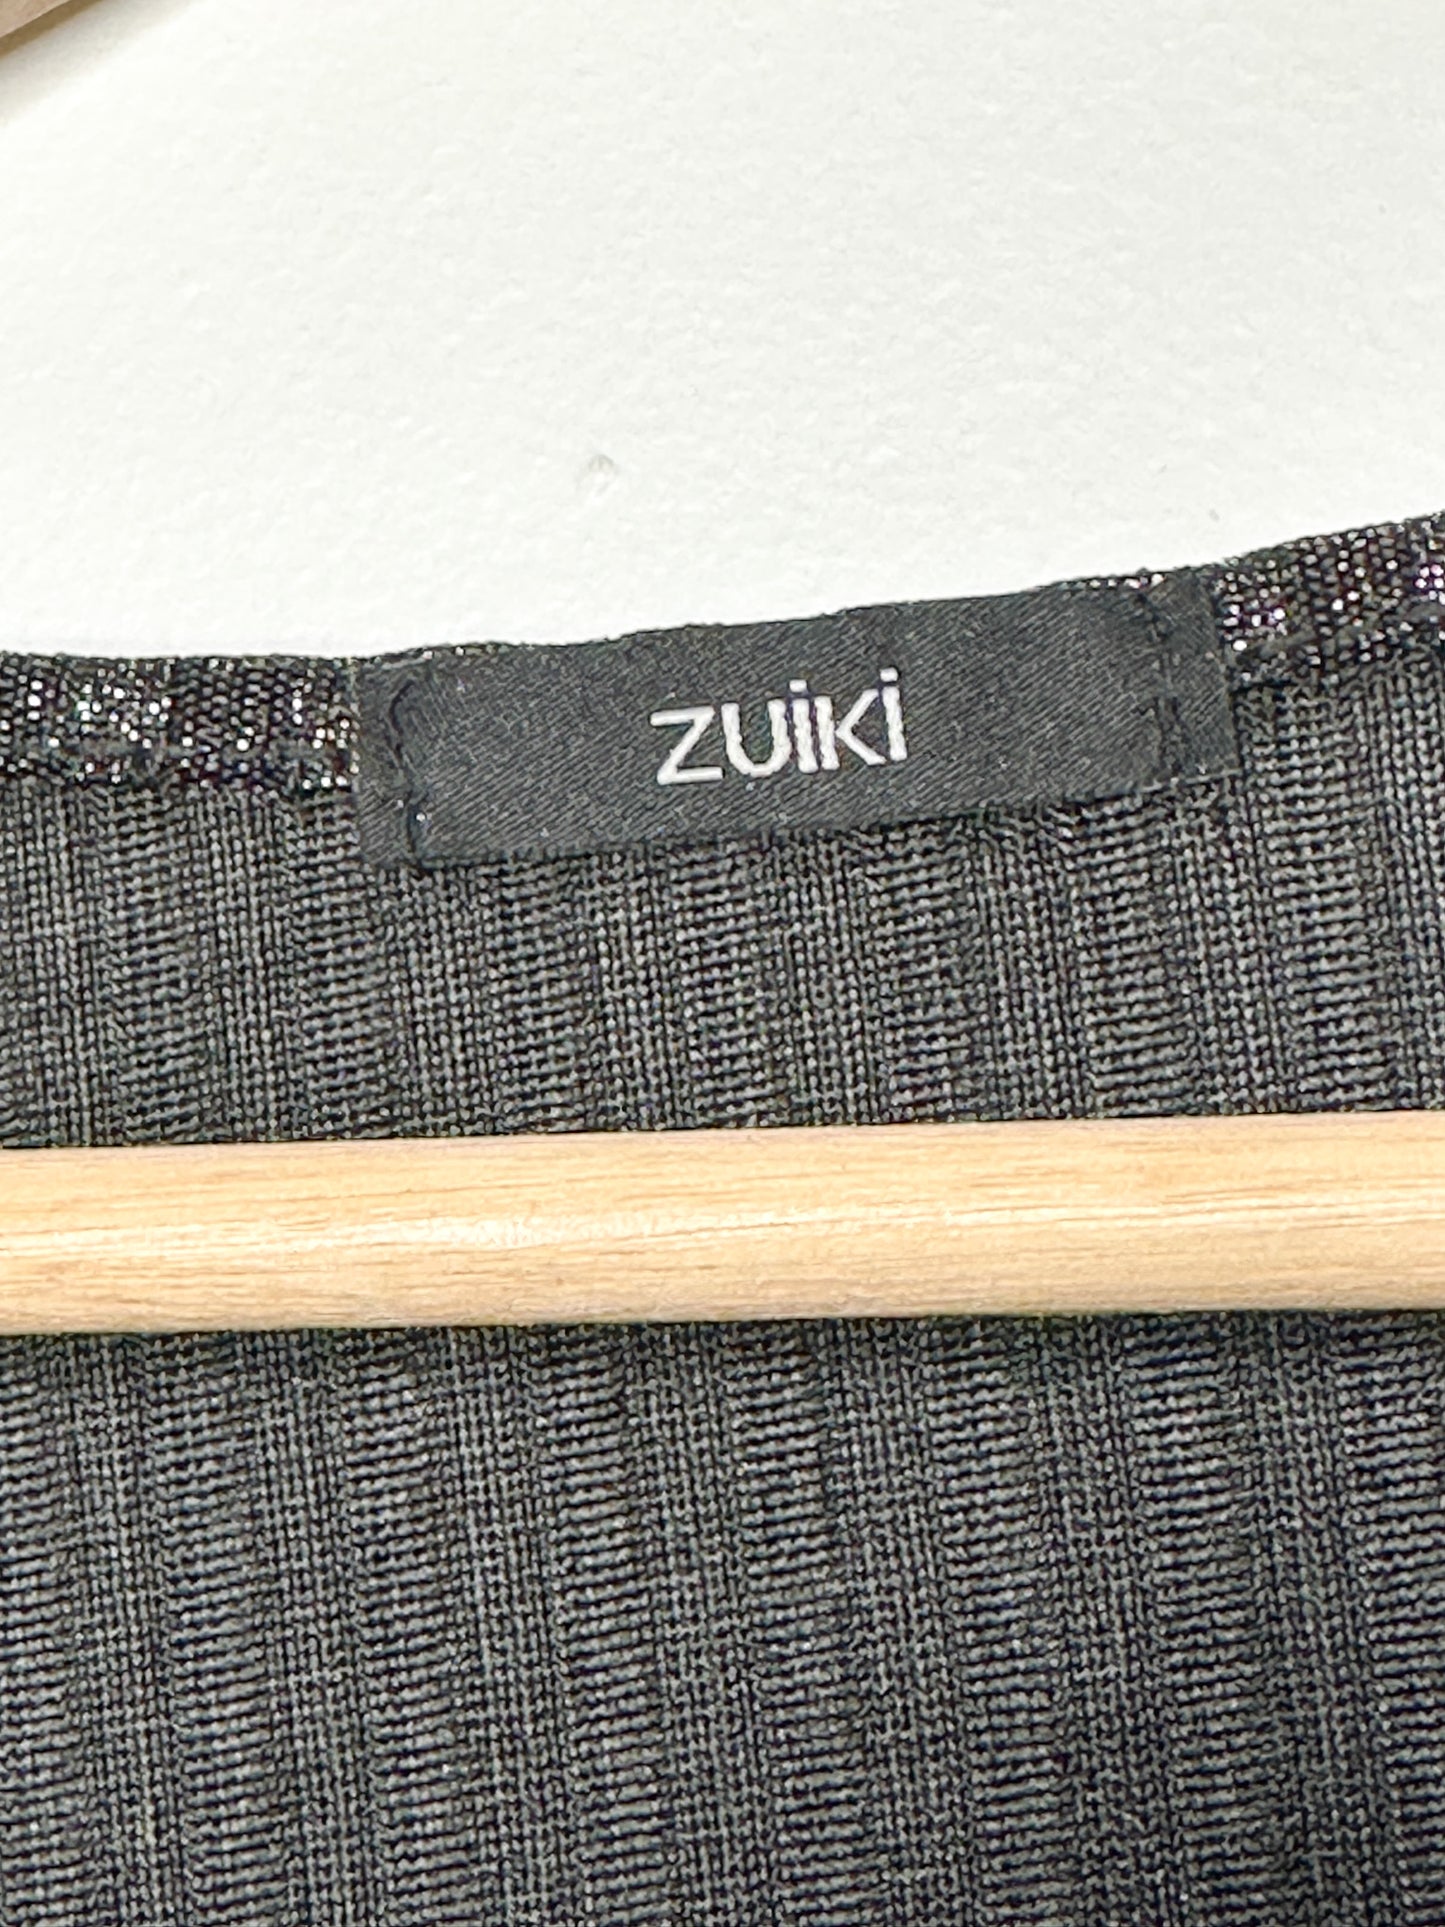 Vintage Zuiki Onesie | Black Body Suit with silver stripes